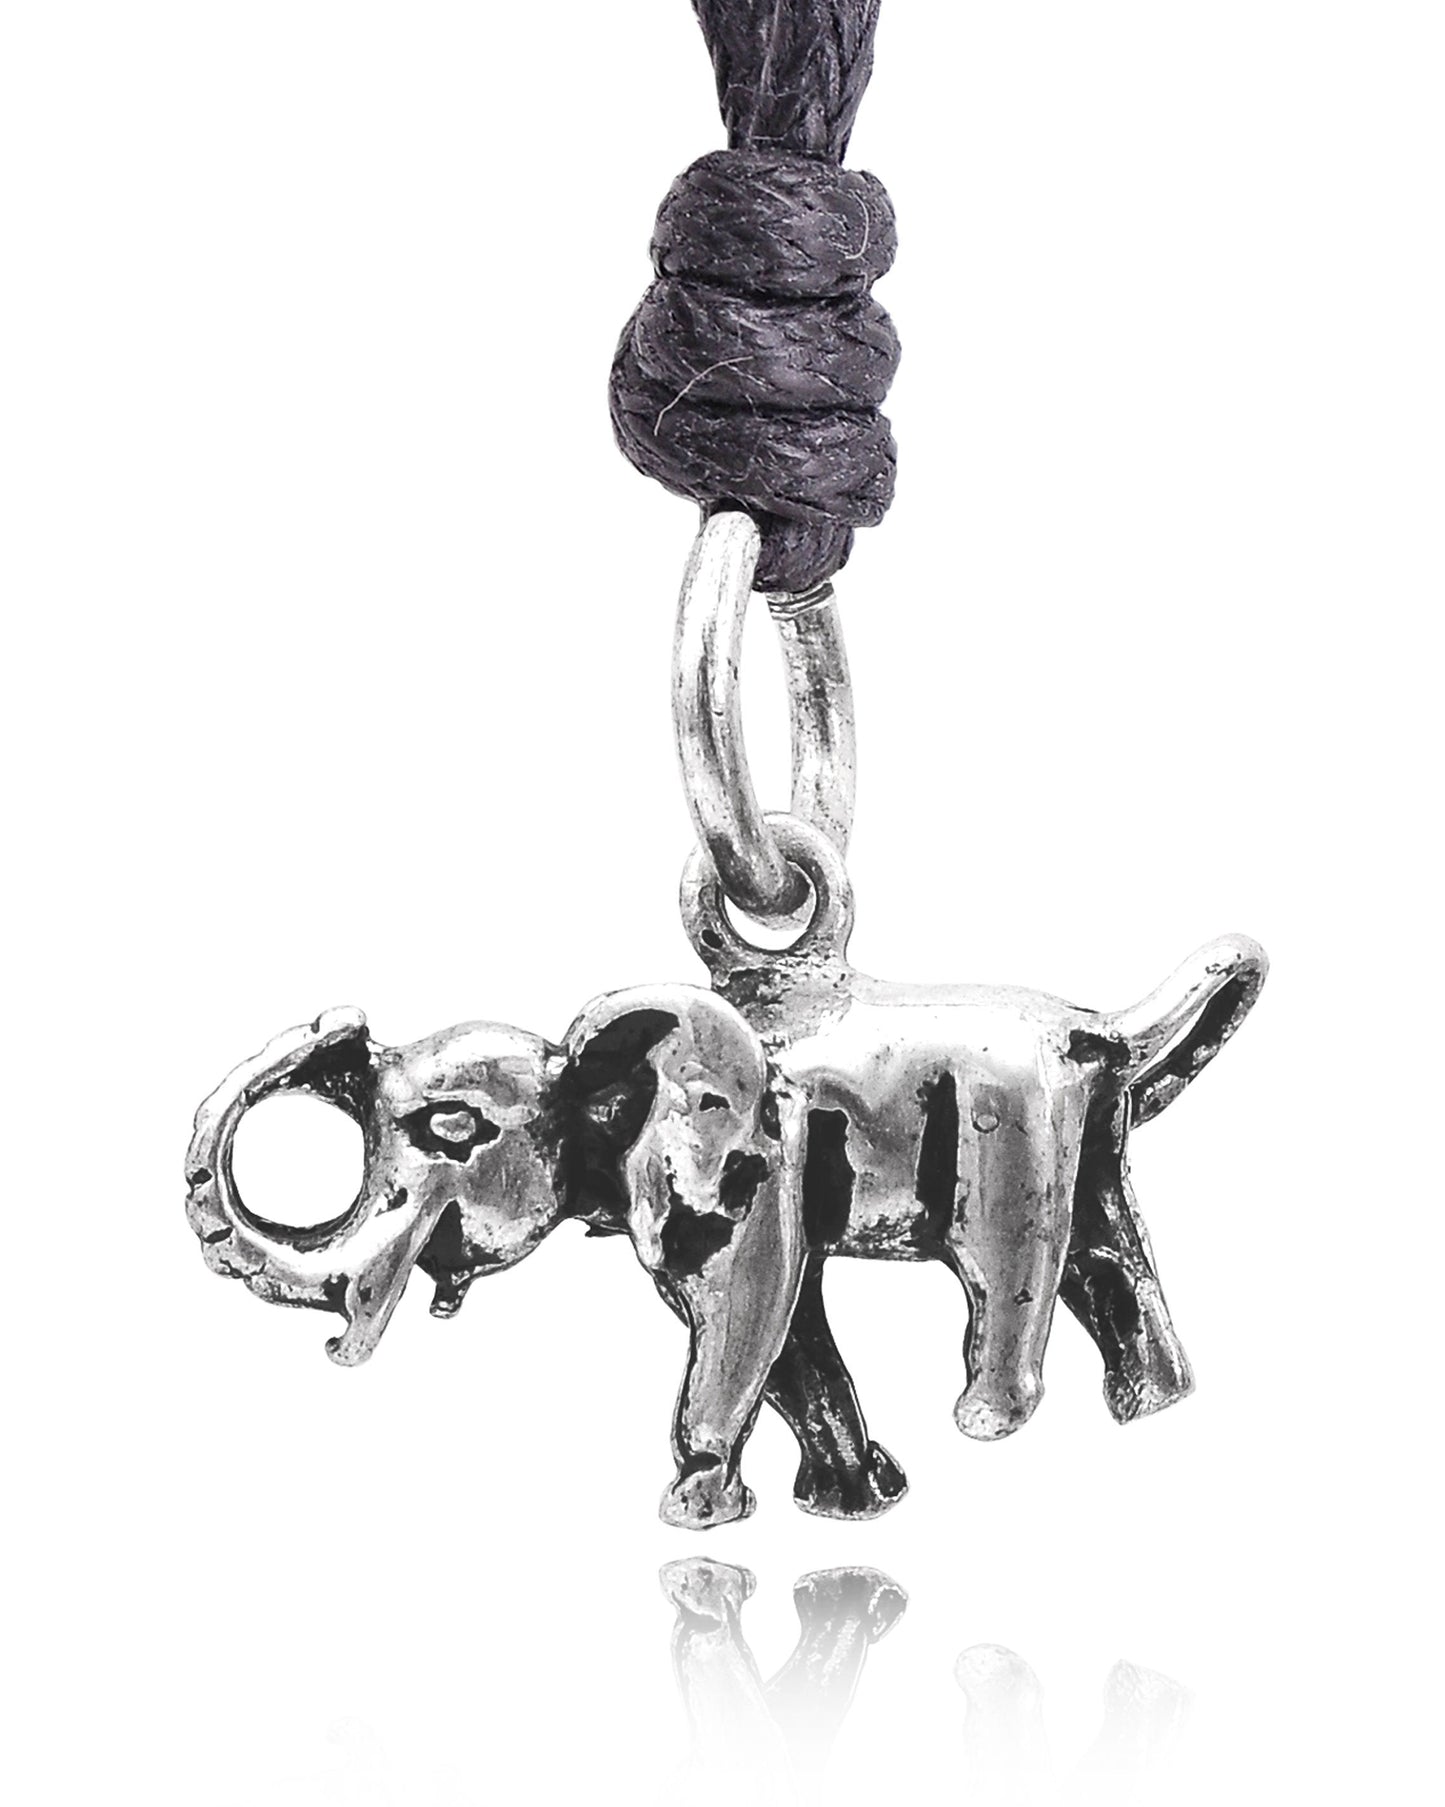 Walking Elephant 92.5 Sterling Silver Gold Brass  Necklace Pendant Jewelry